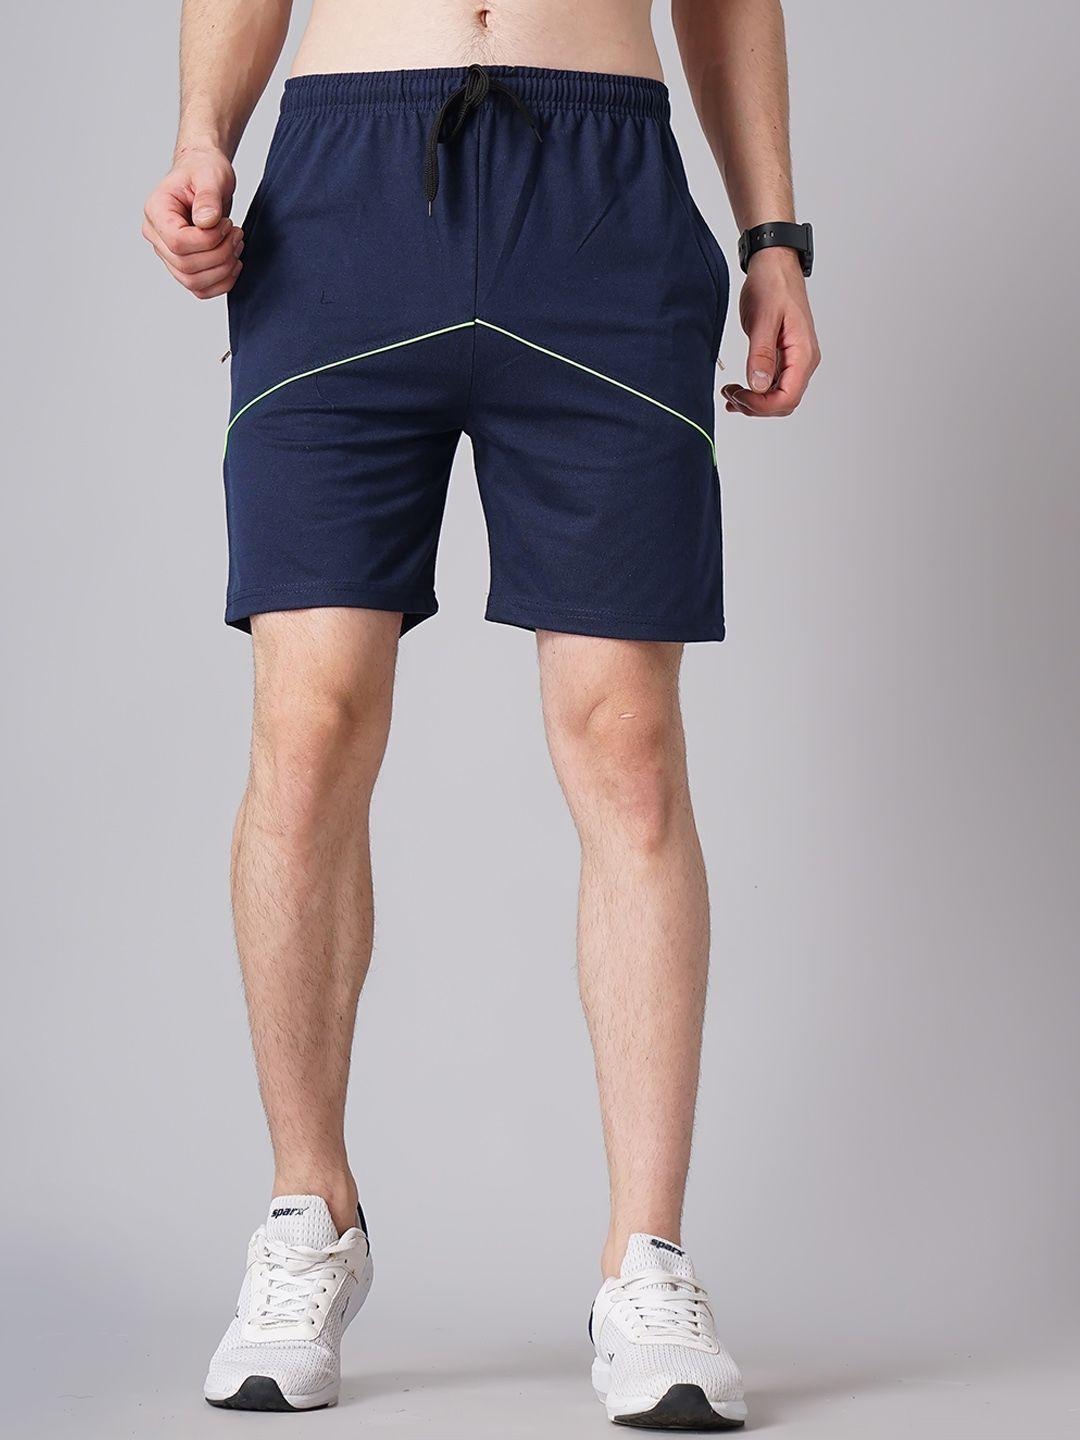 madsto-men-cotton-slim-fit-sports-shorts